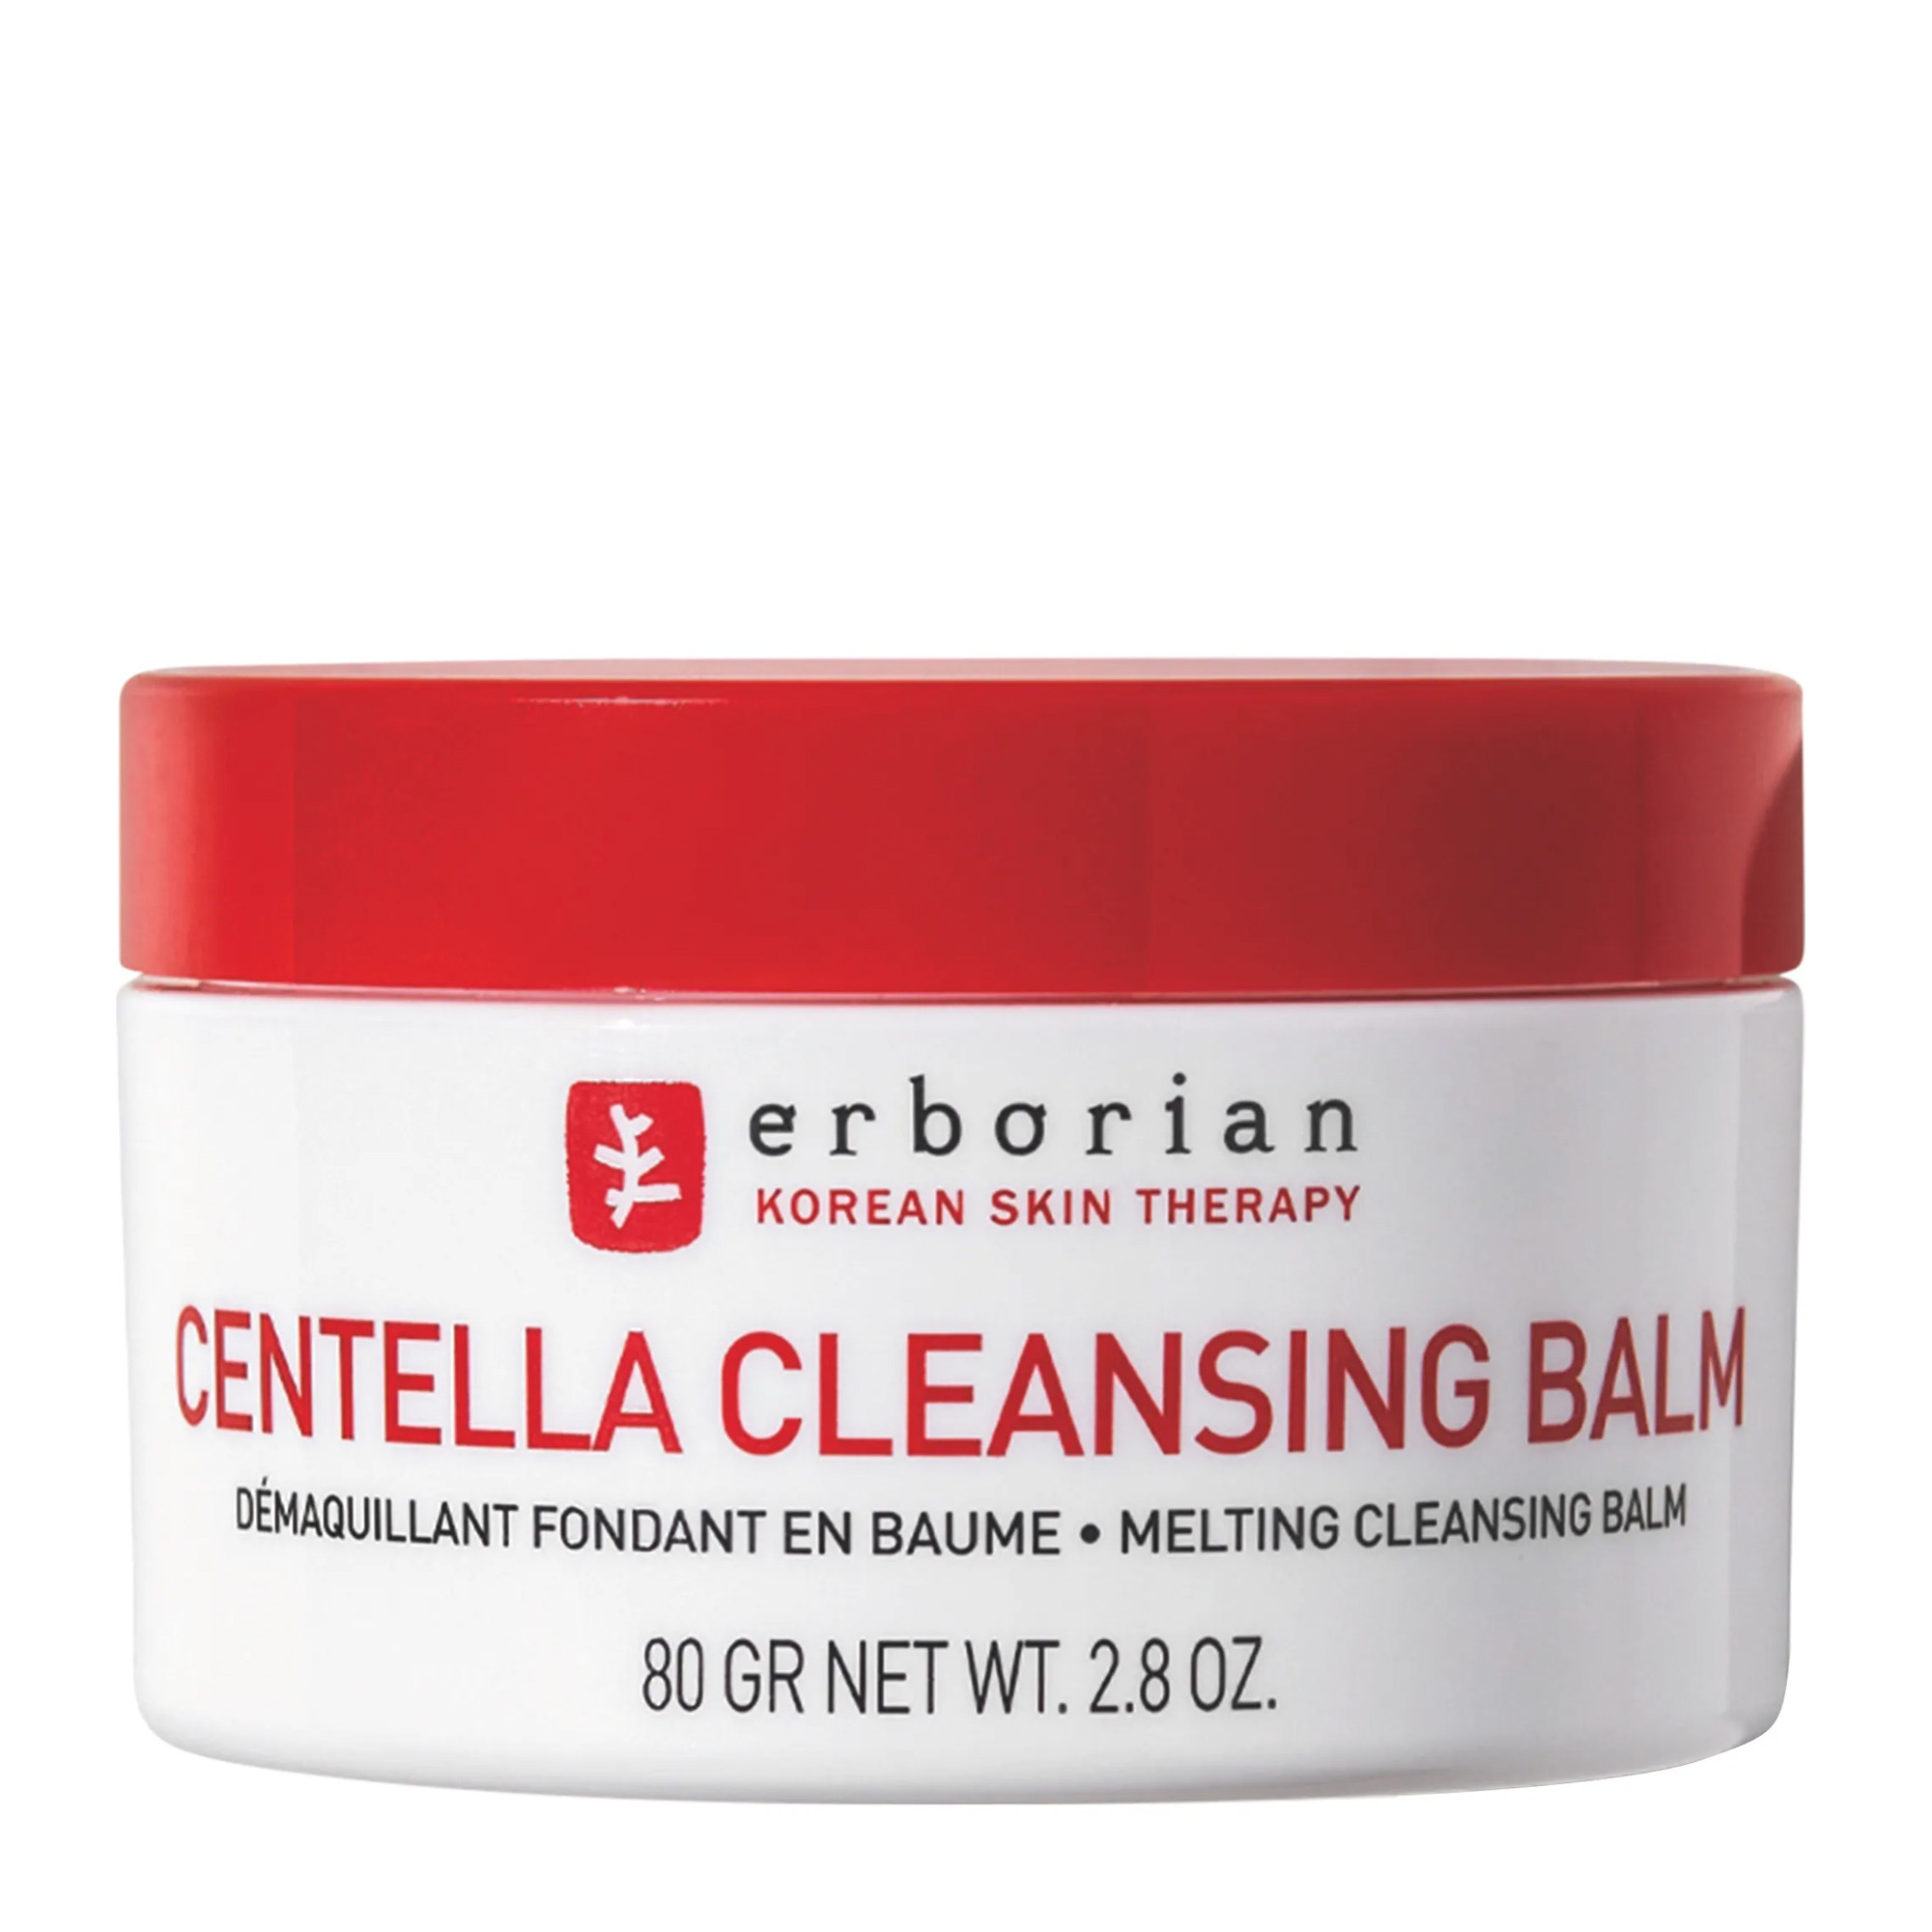 Erborian Centella Cleansing Balm Melting Cleansing Balm - Бальзам для очищения лица Центелла